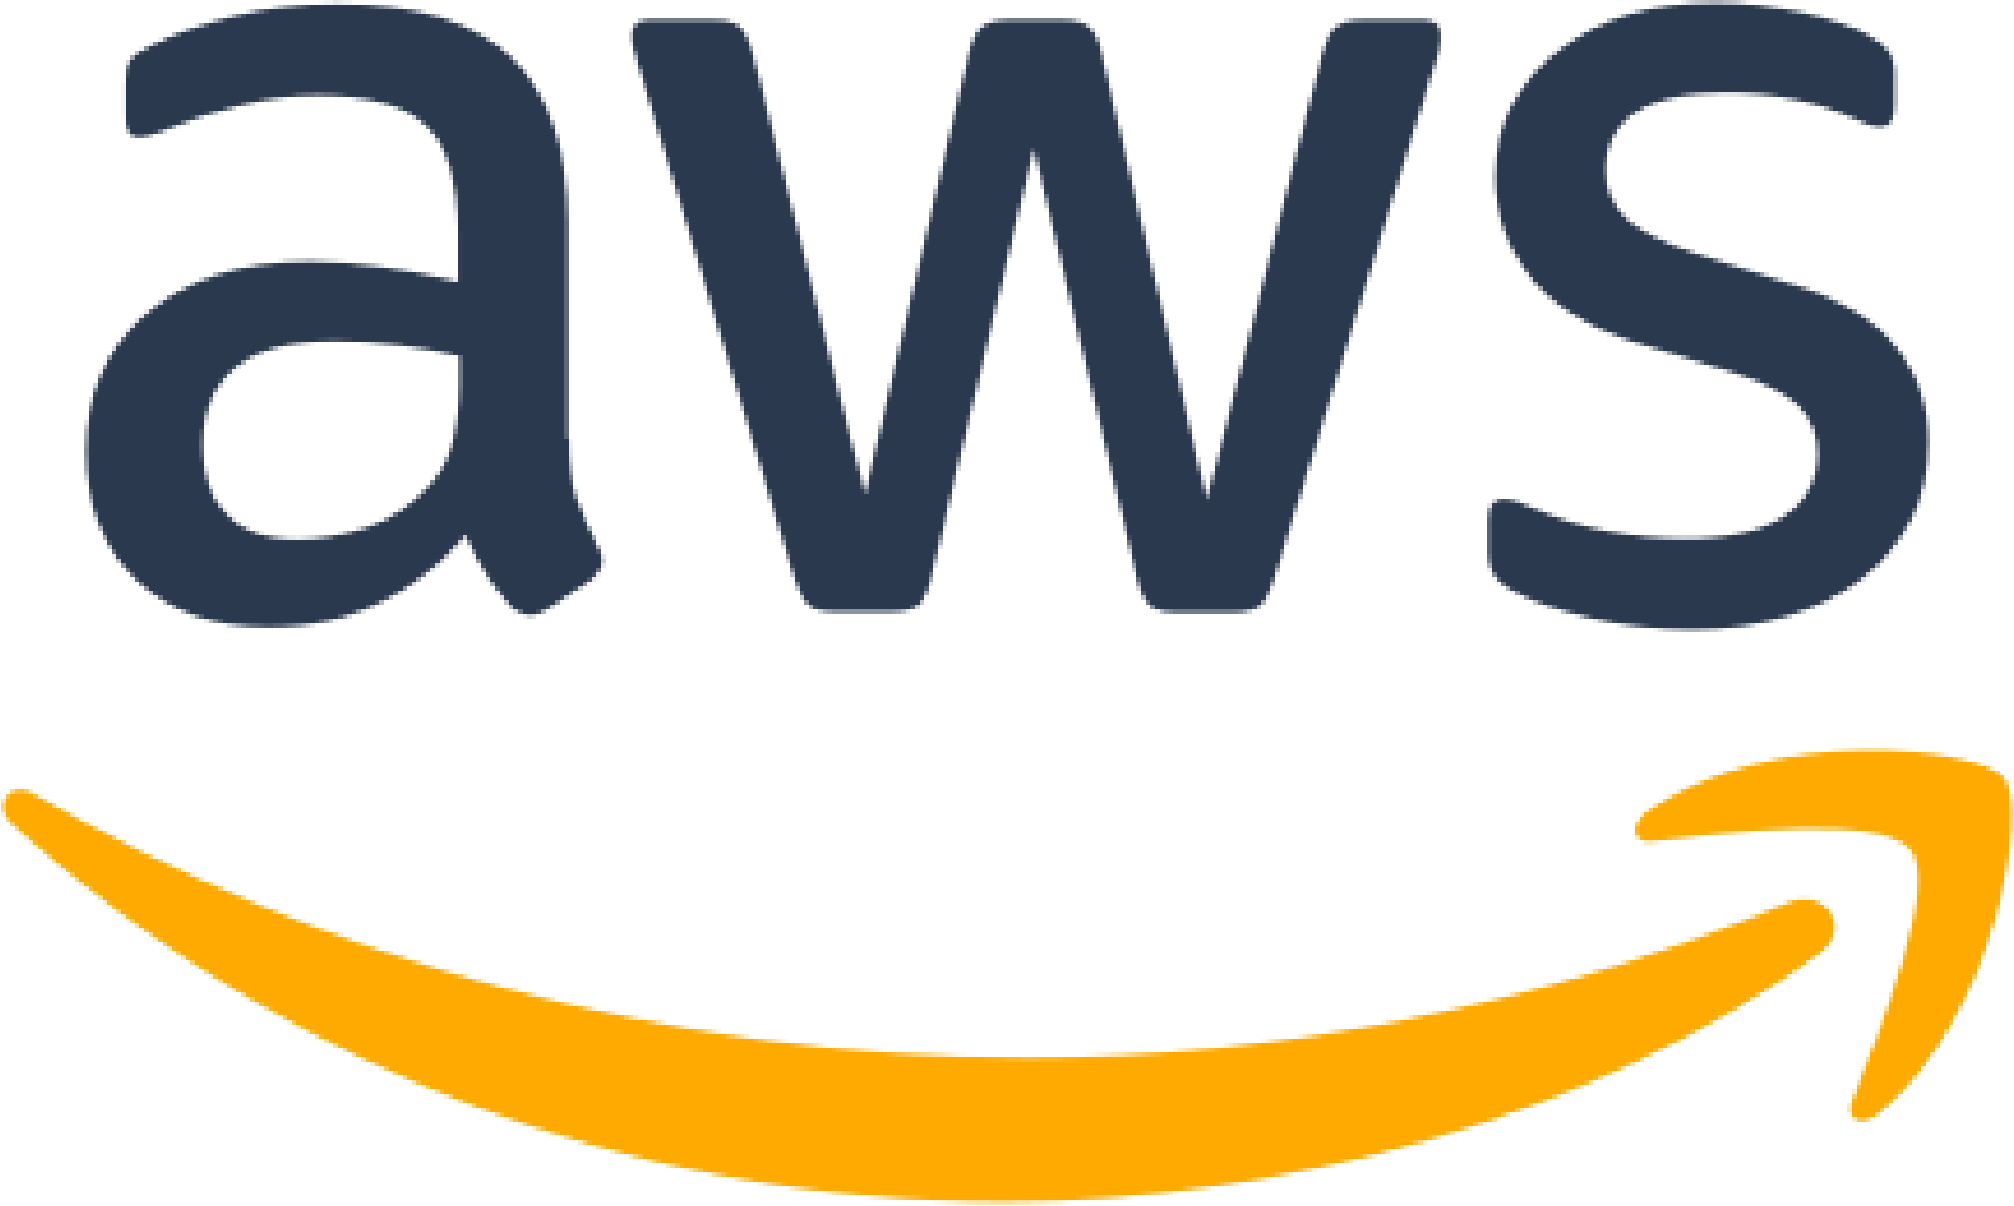 Logo AWS